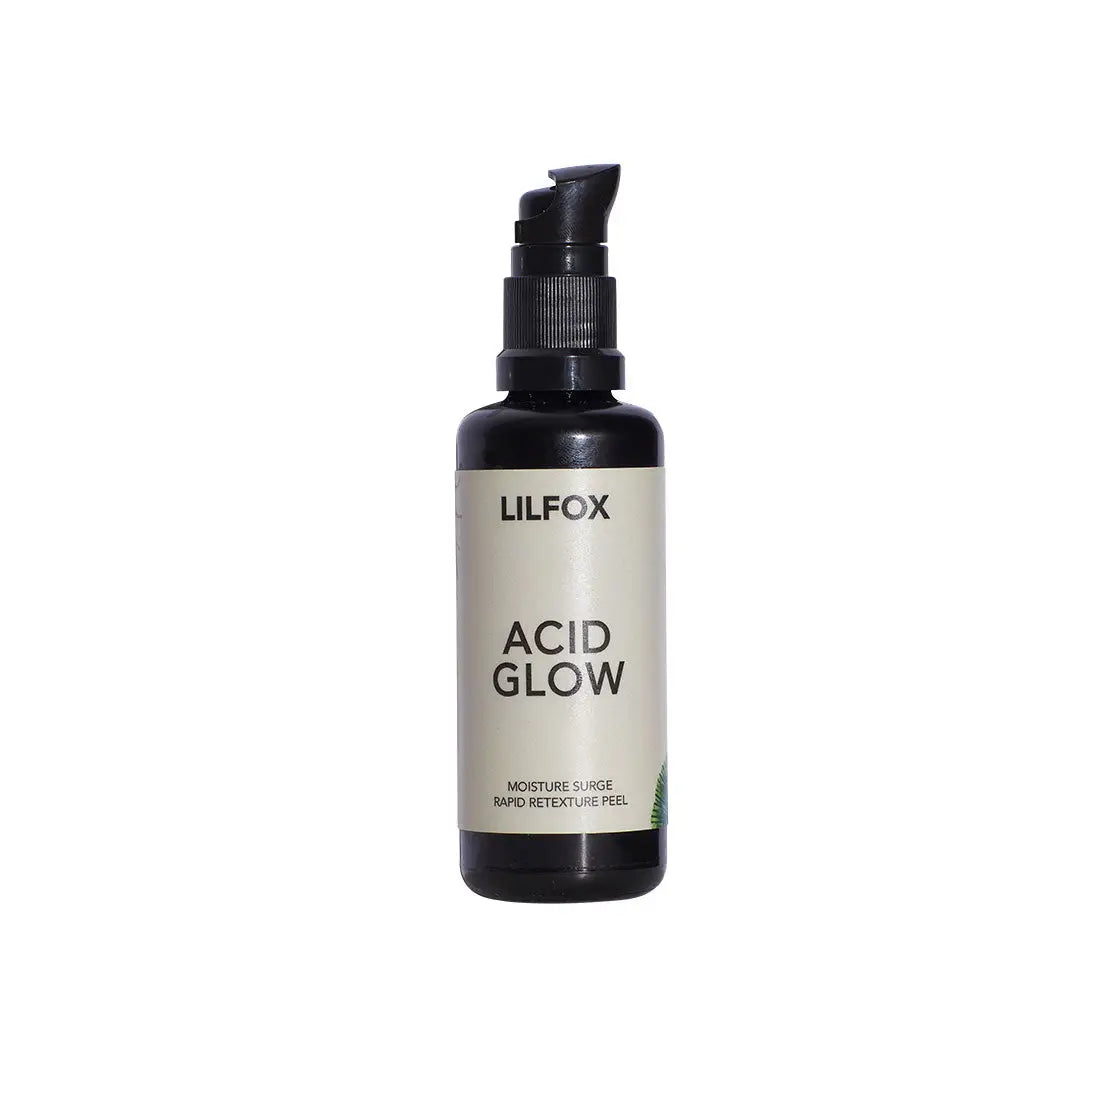 Lilfox Acid Glow Rapid Retexture Peel 50ml